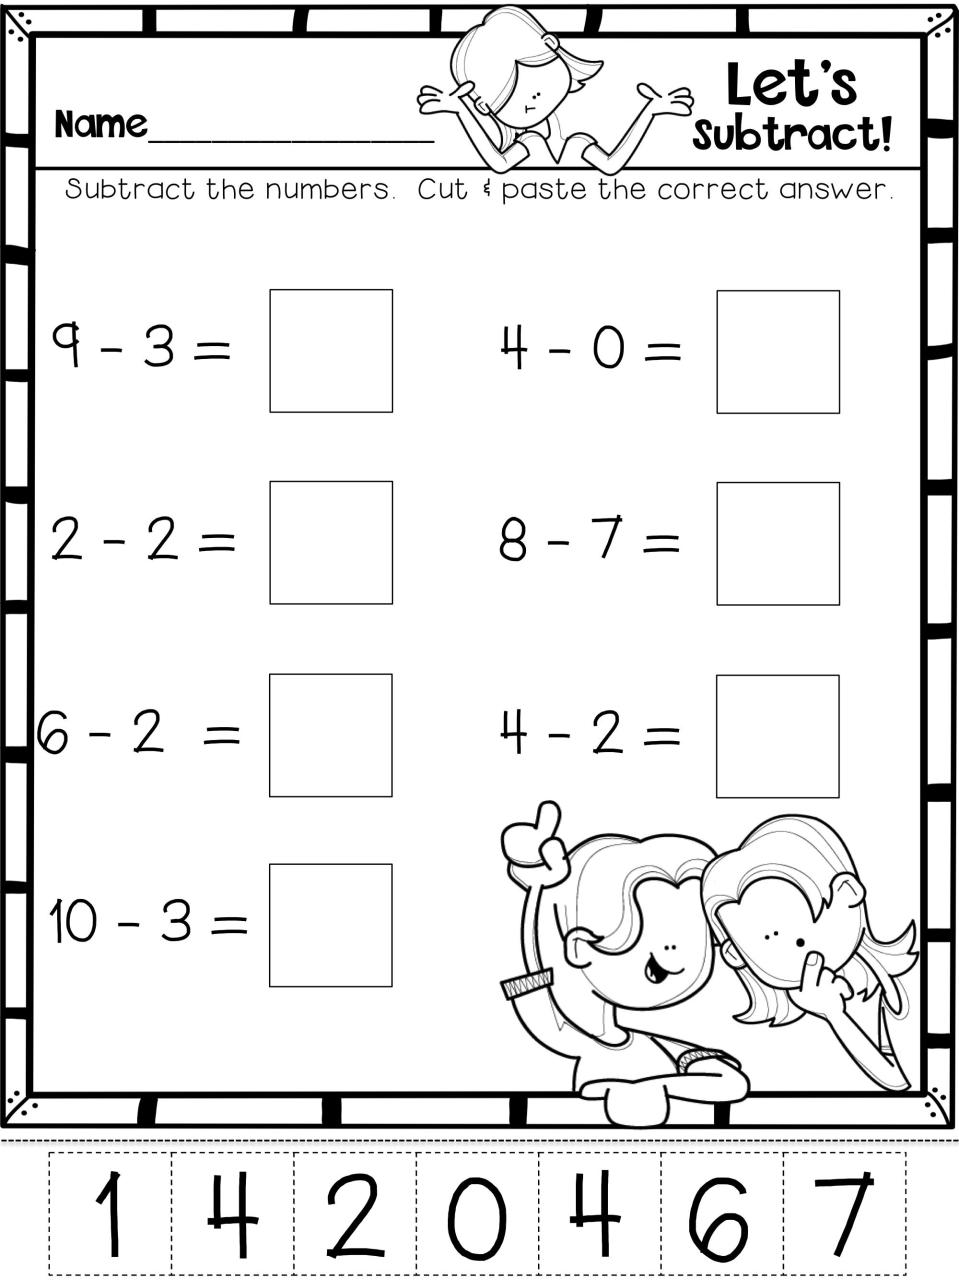 Subtraction Worksheets For Kindergarten With Pictures